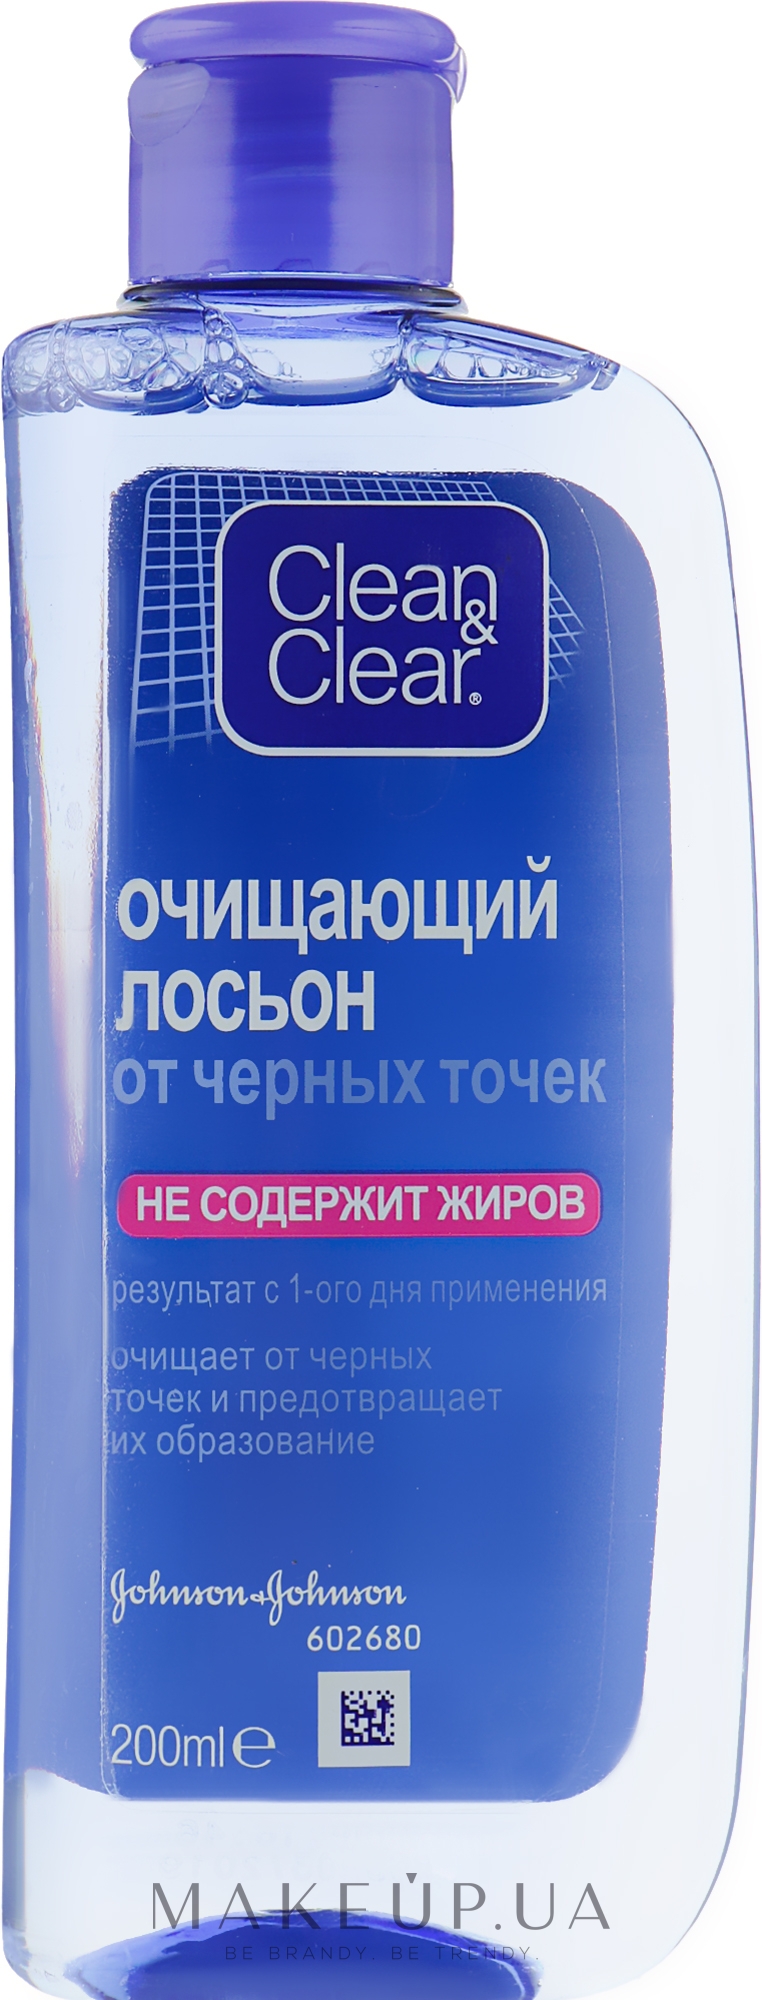 Лосьон для очистки кожи от черных точек - Clean & Clear Blackhead Clearing Daily Lotion — фото 200ml